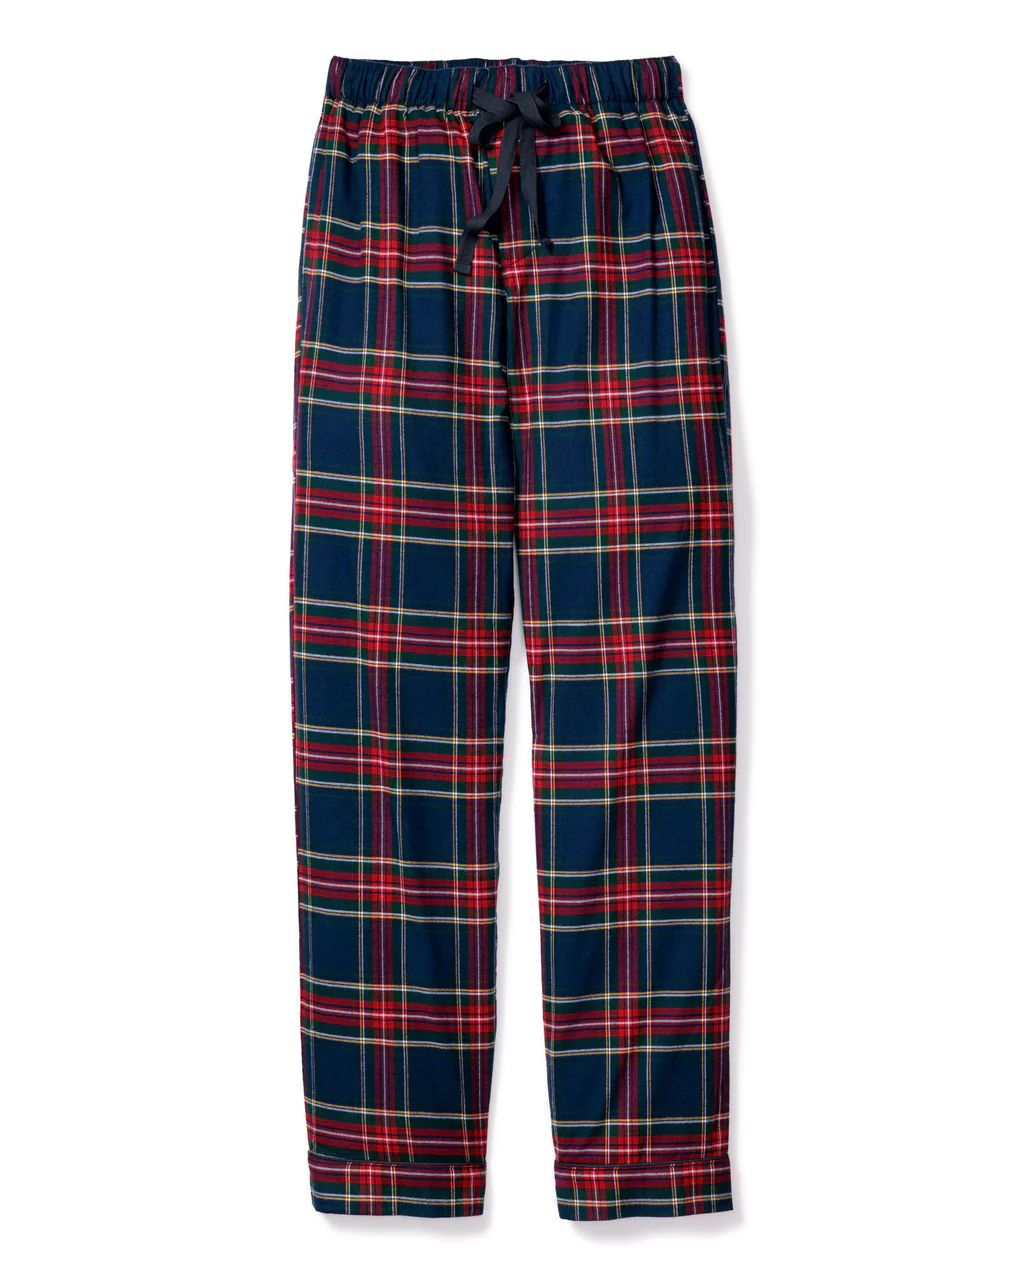 Men's Windsor Tartan Pants | Petite Plume